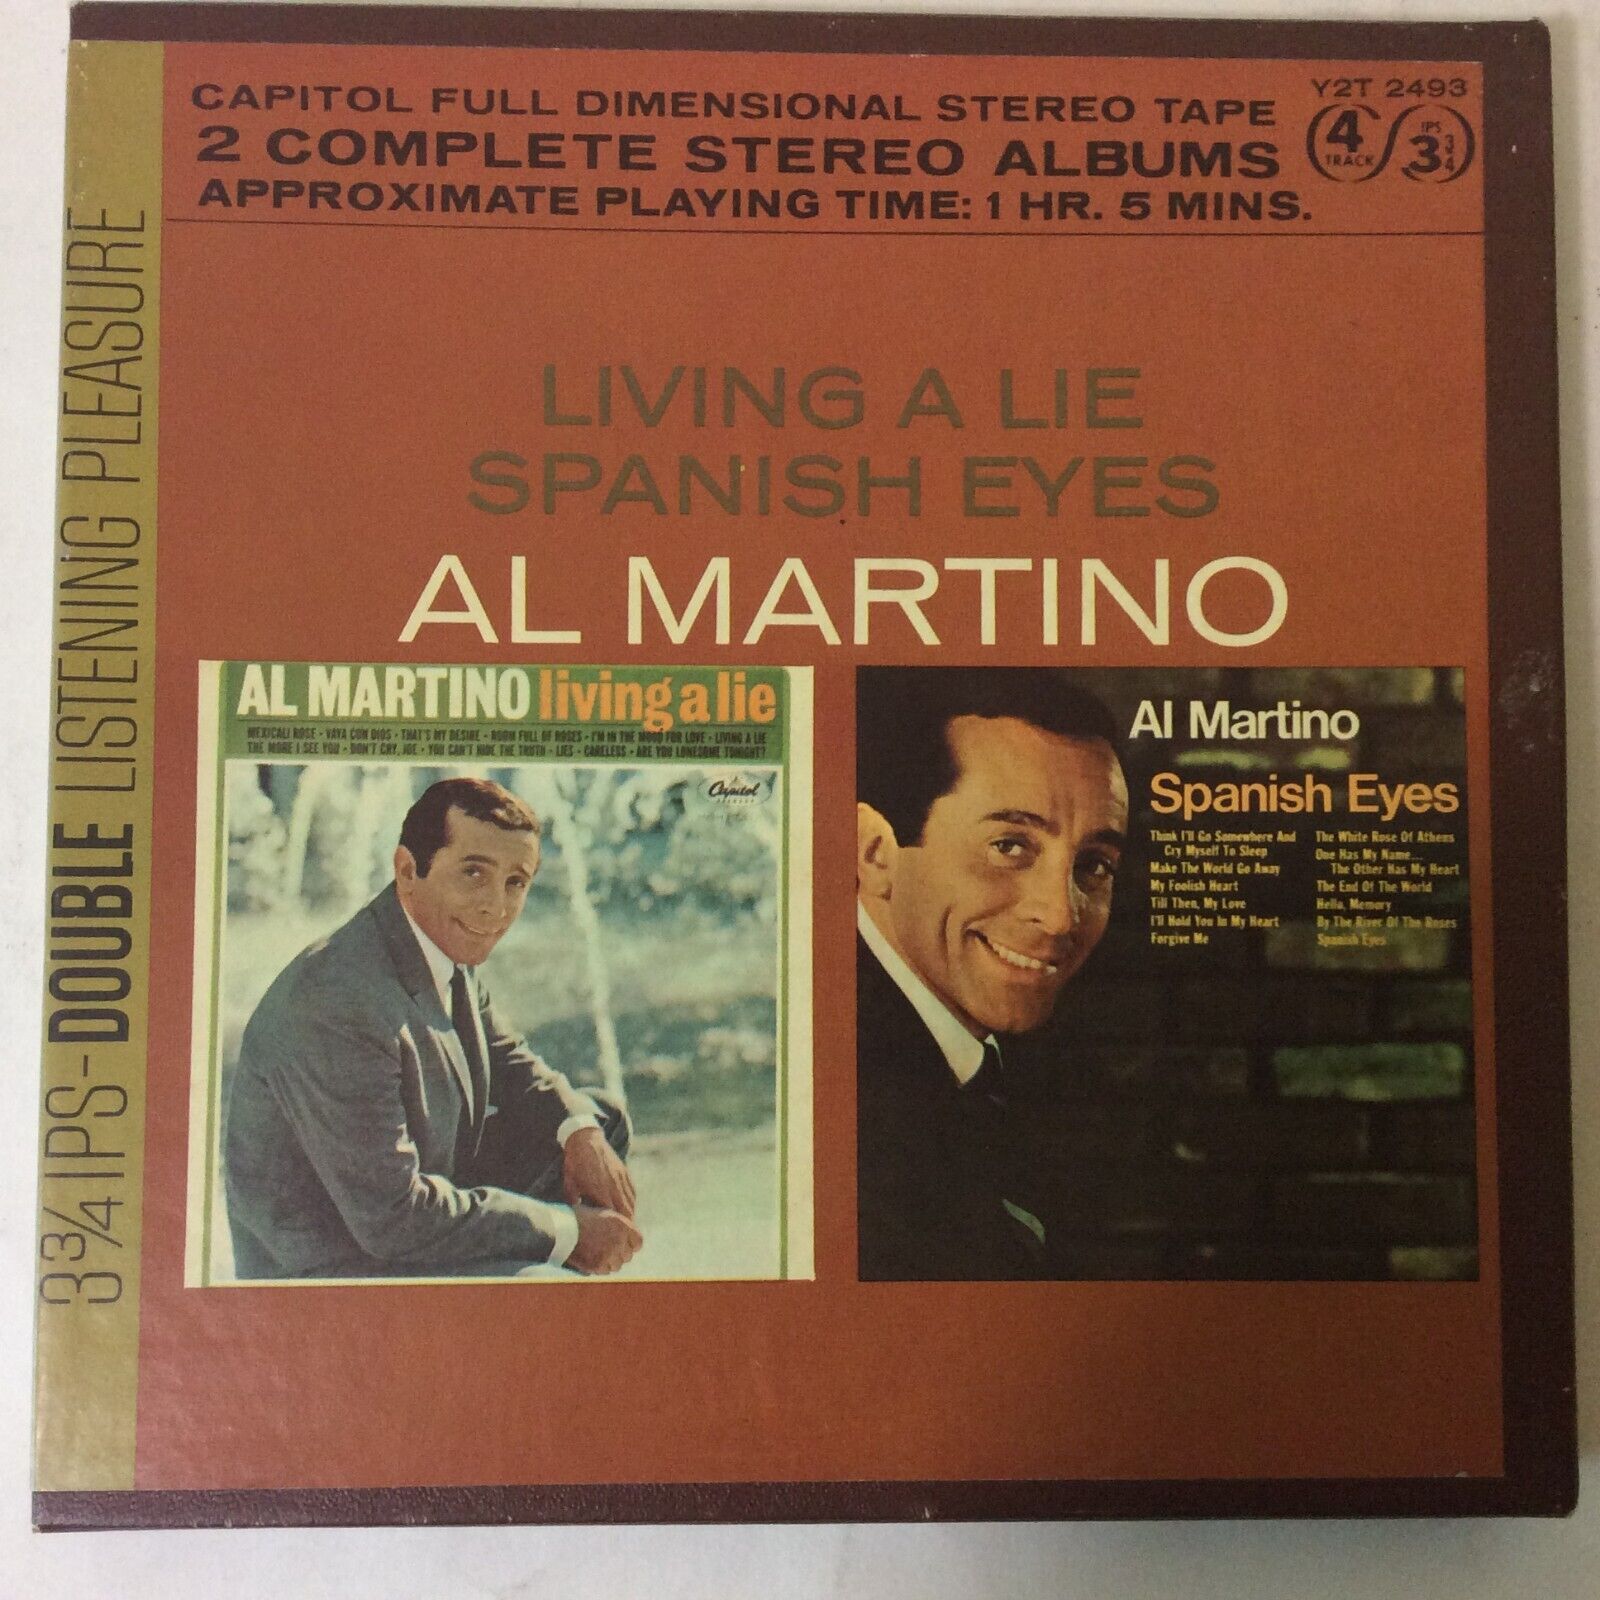 Vintage Al Martino Living a Lie & Spanish Eyes Reel to Reel Tape Y2T 2493